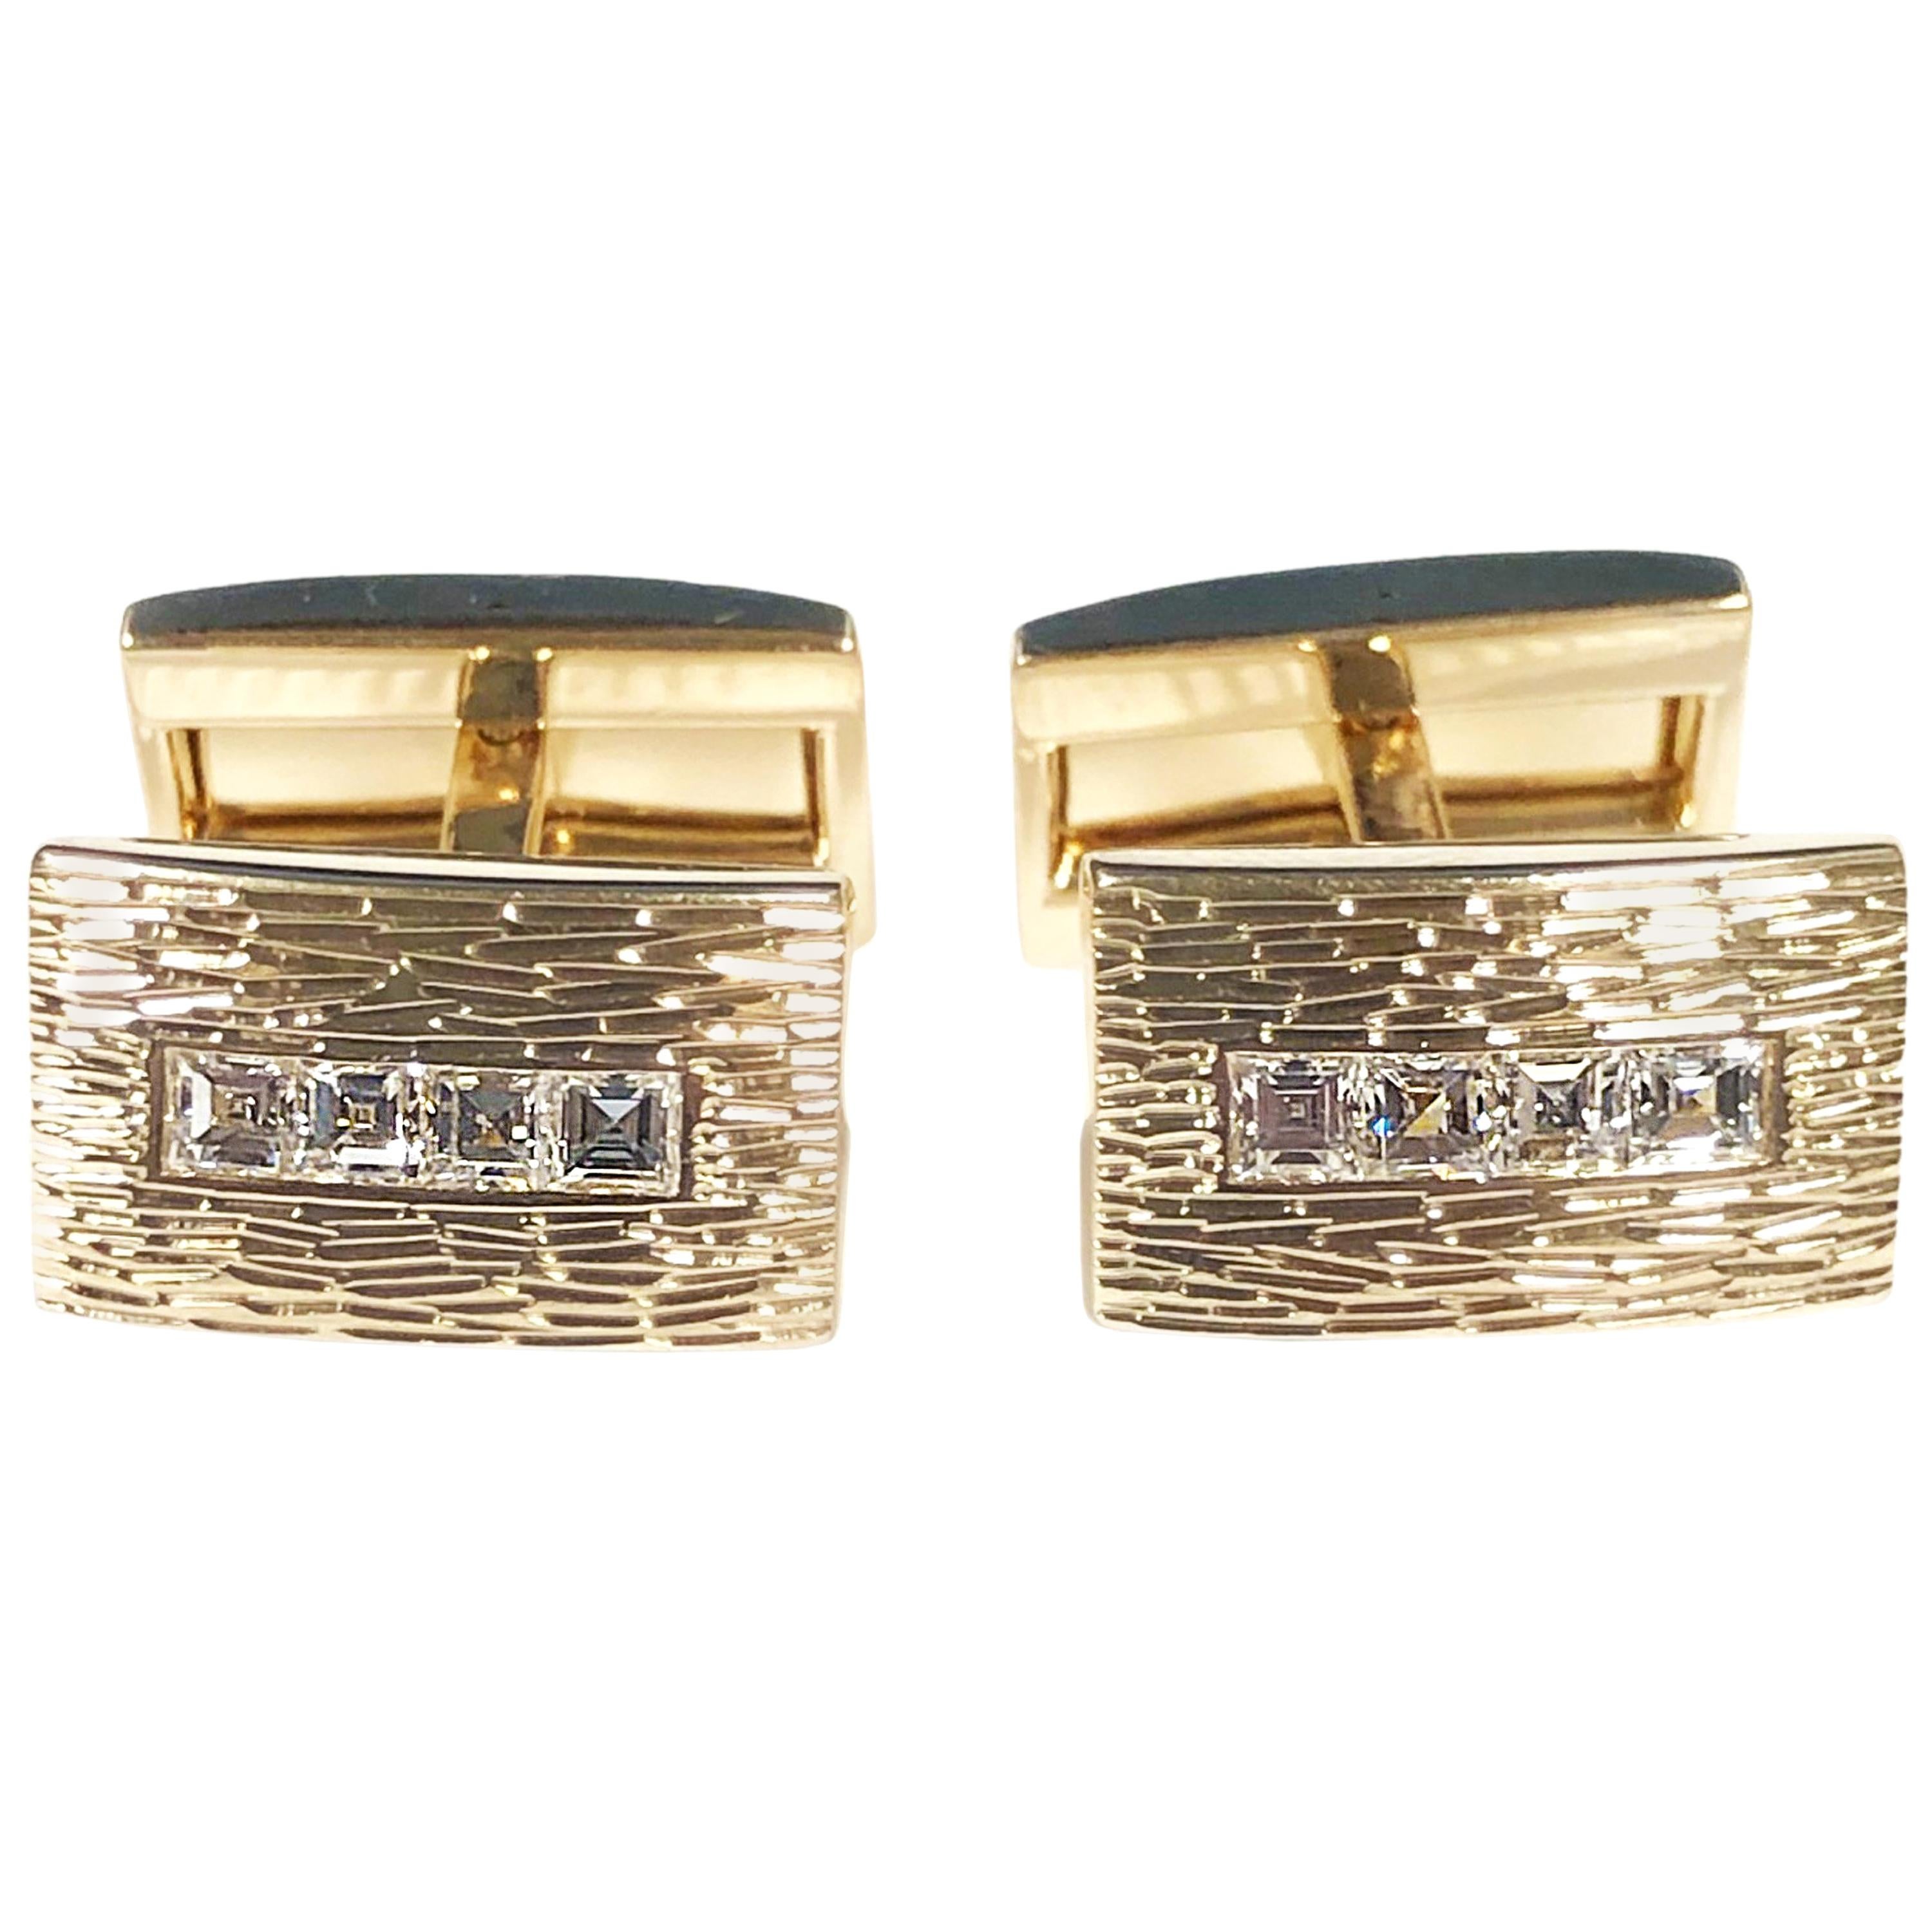 Tiffany & Co. Yellow Gold and Square Cut Diamond Cufflinks